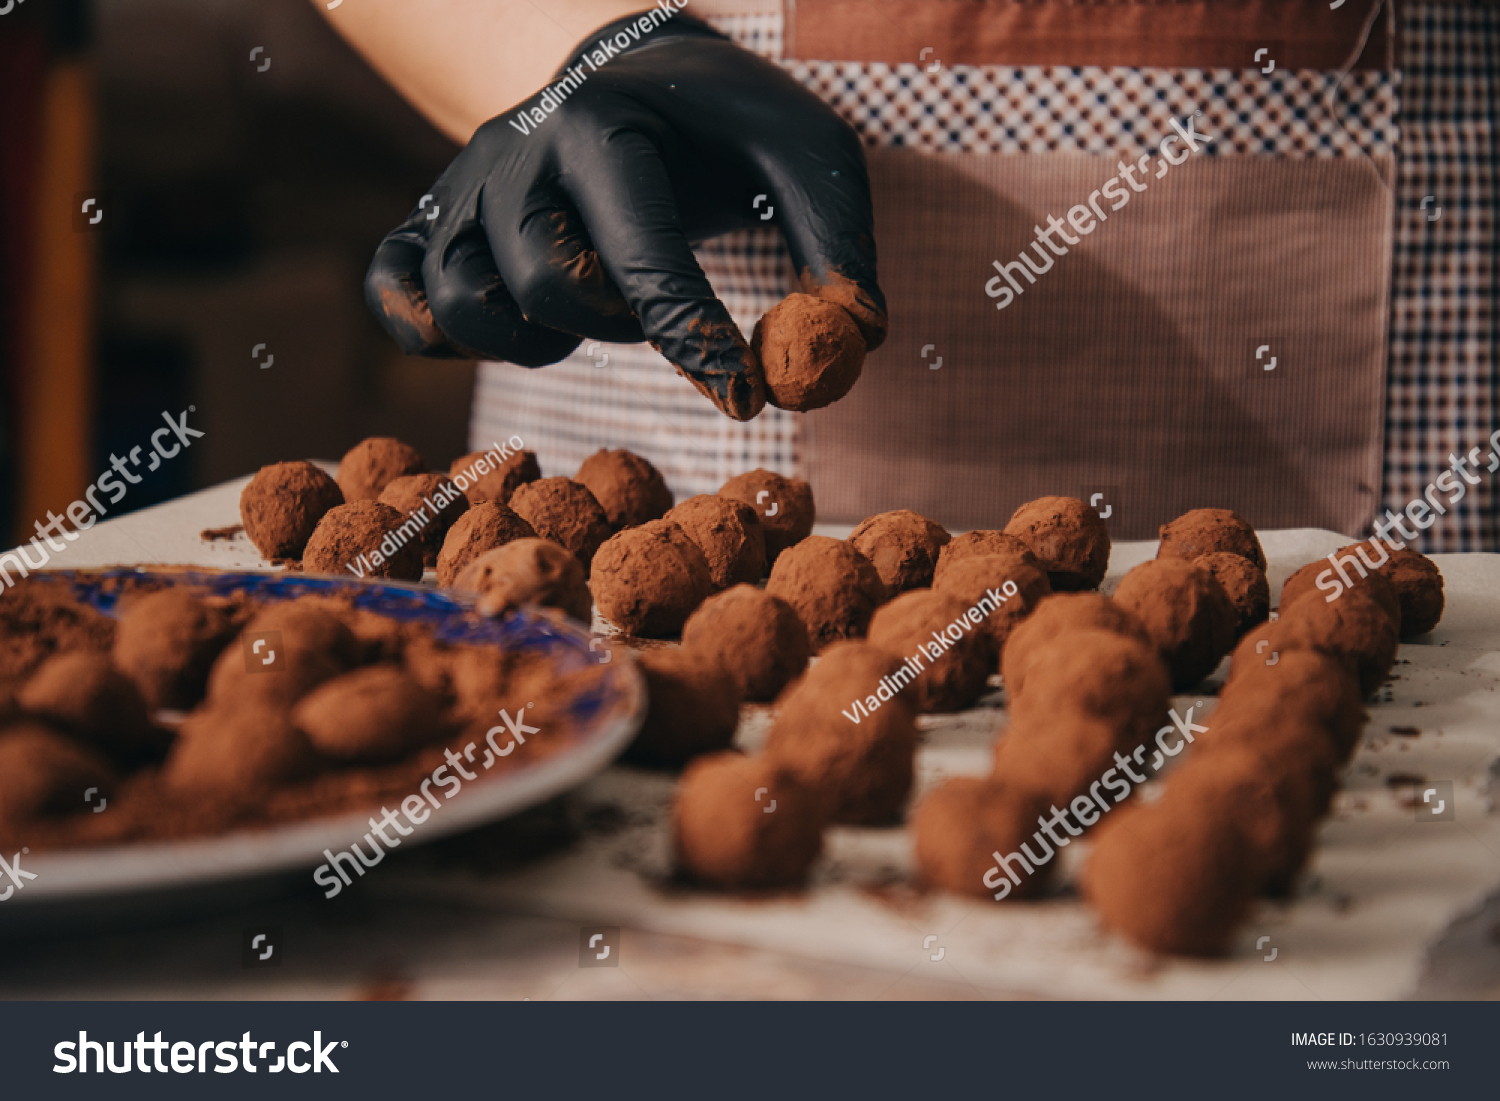 A gloved hand preparing chocolate truffles.